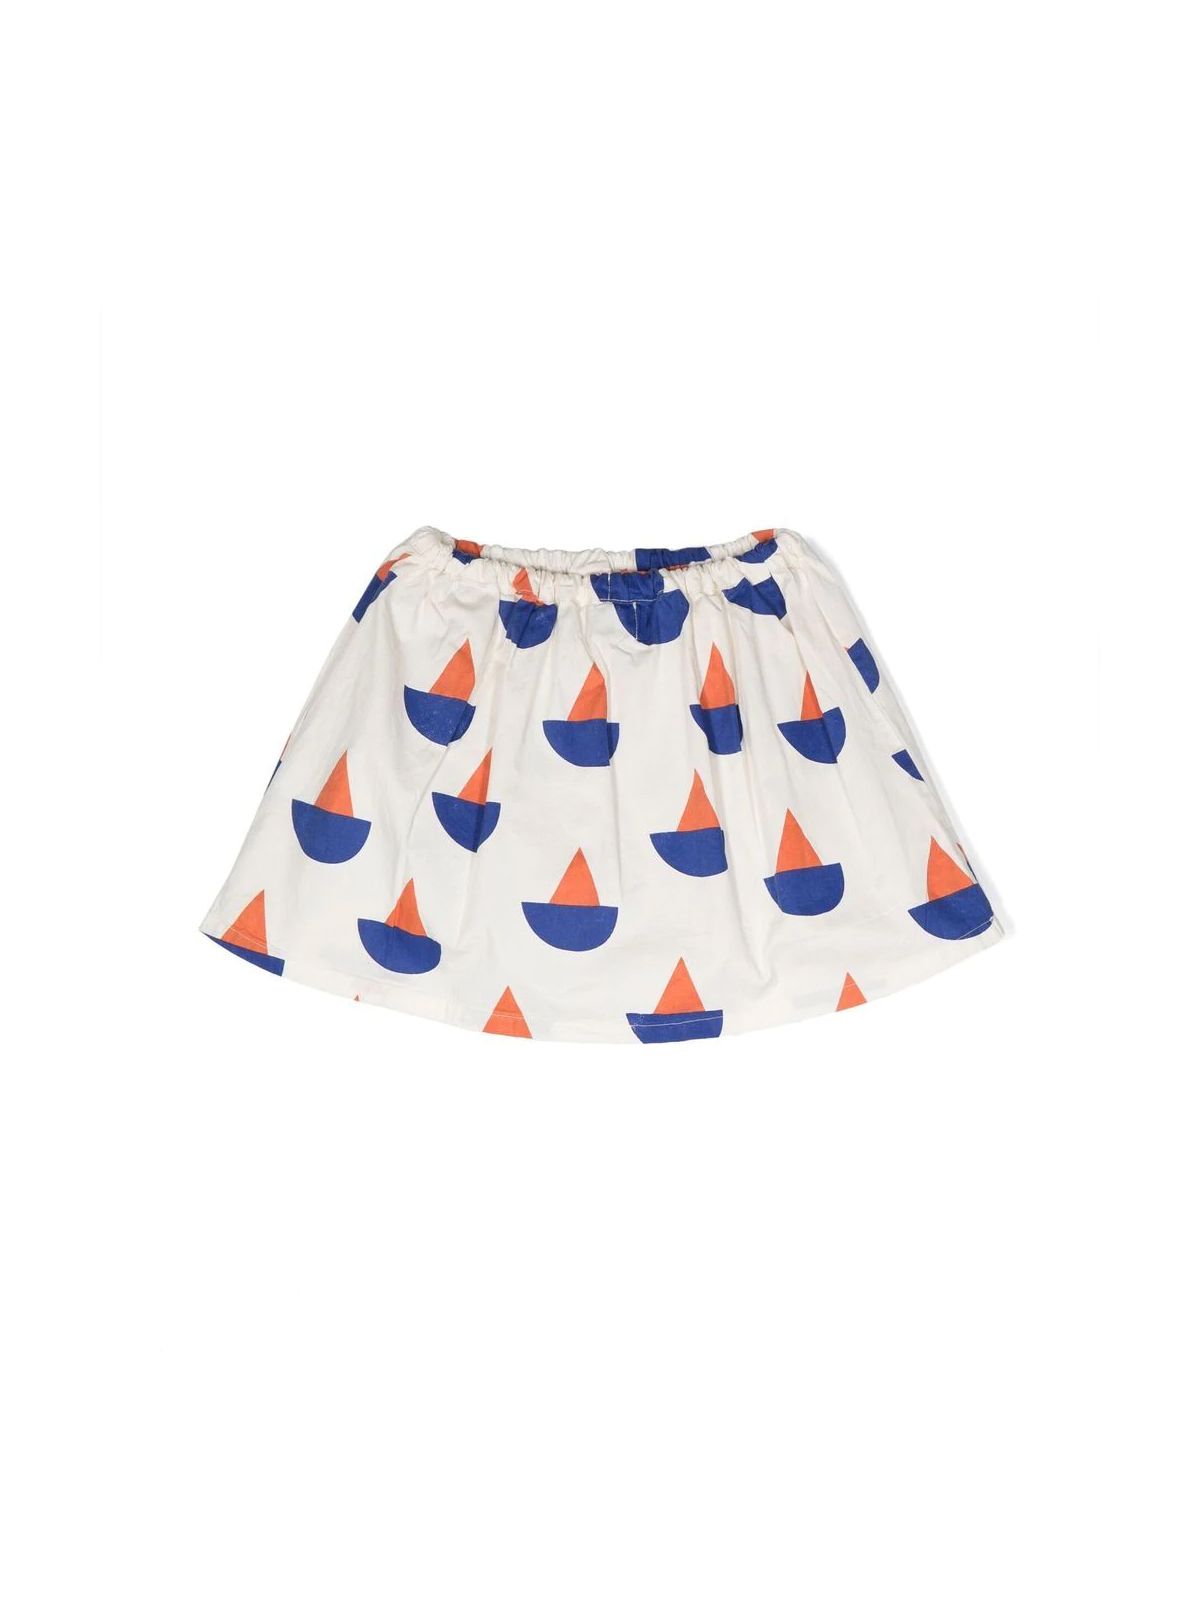 Shop Bobo Choses Organic Cotton Skirt: Sail Boat